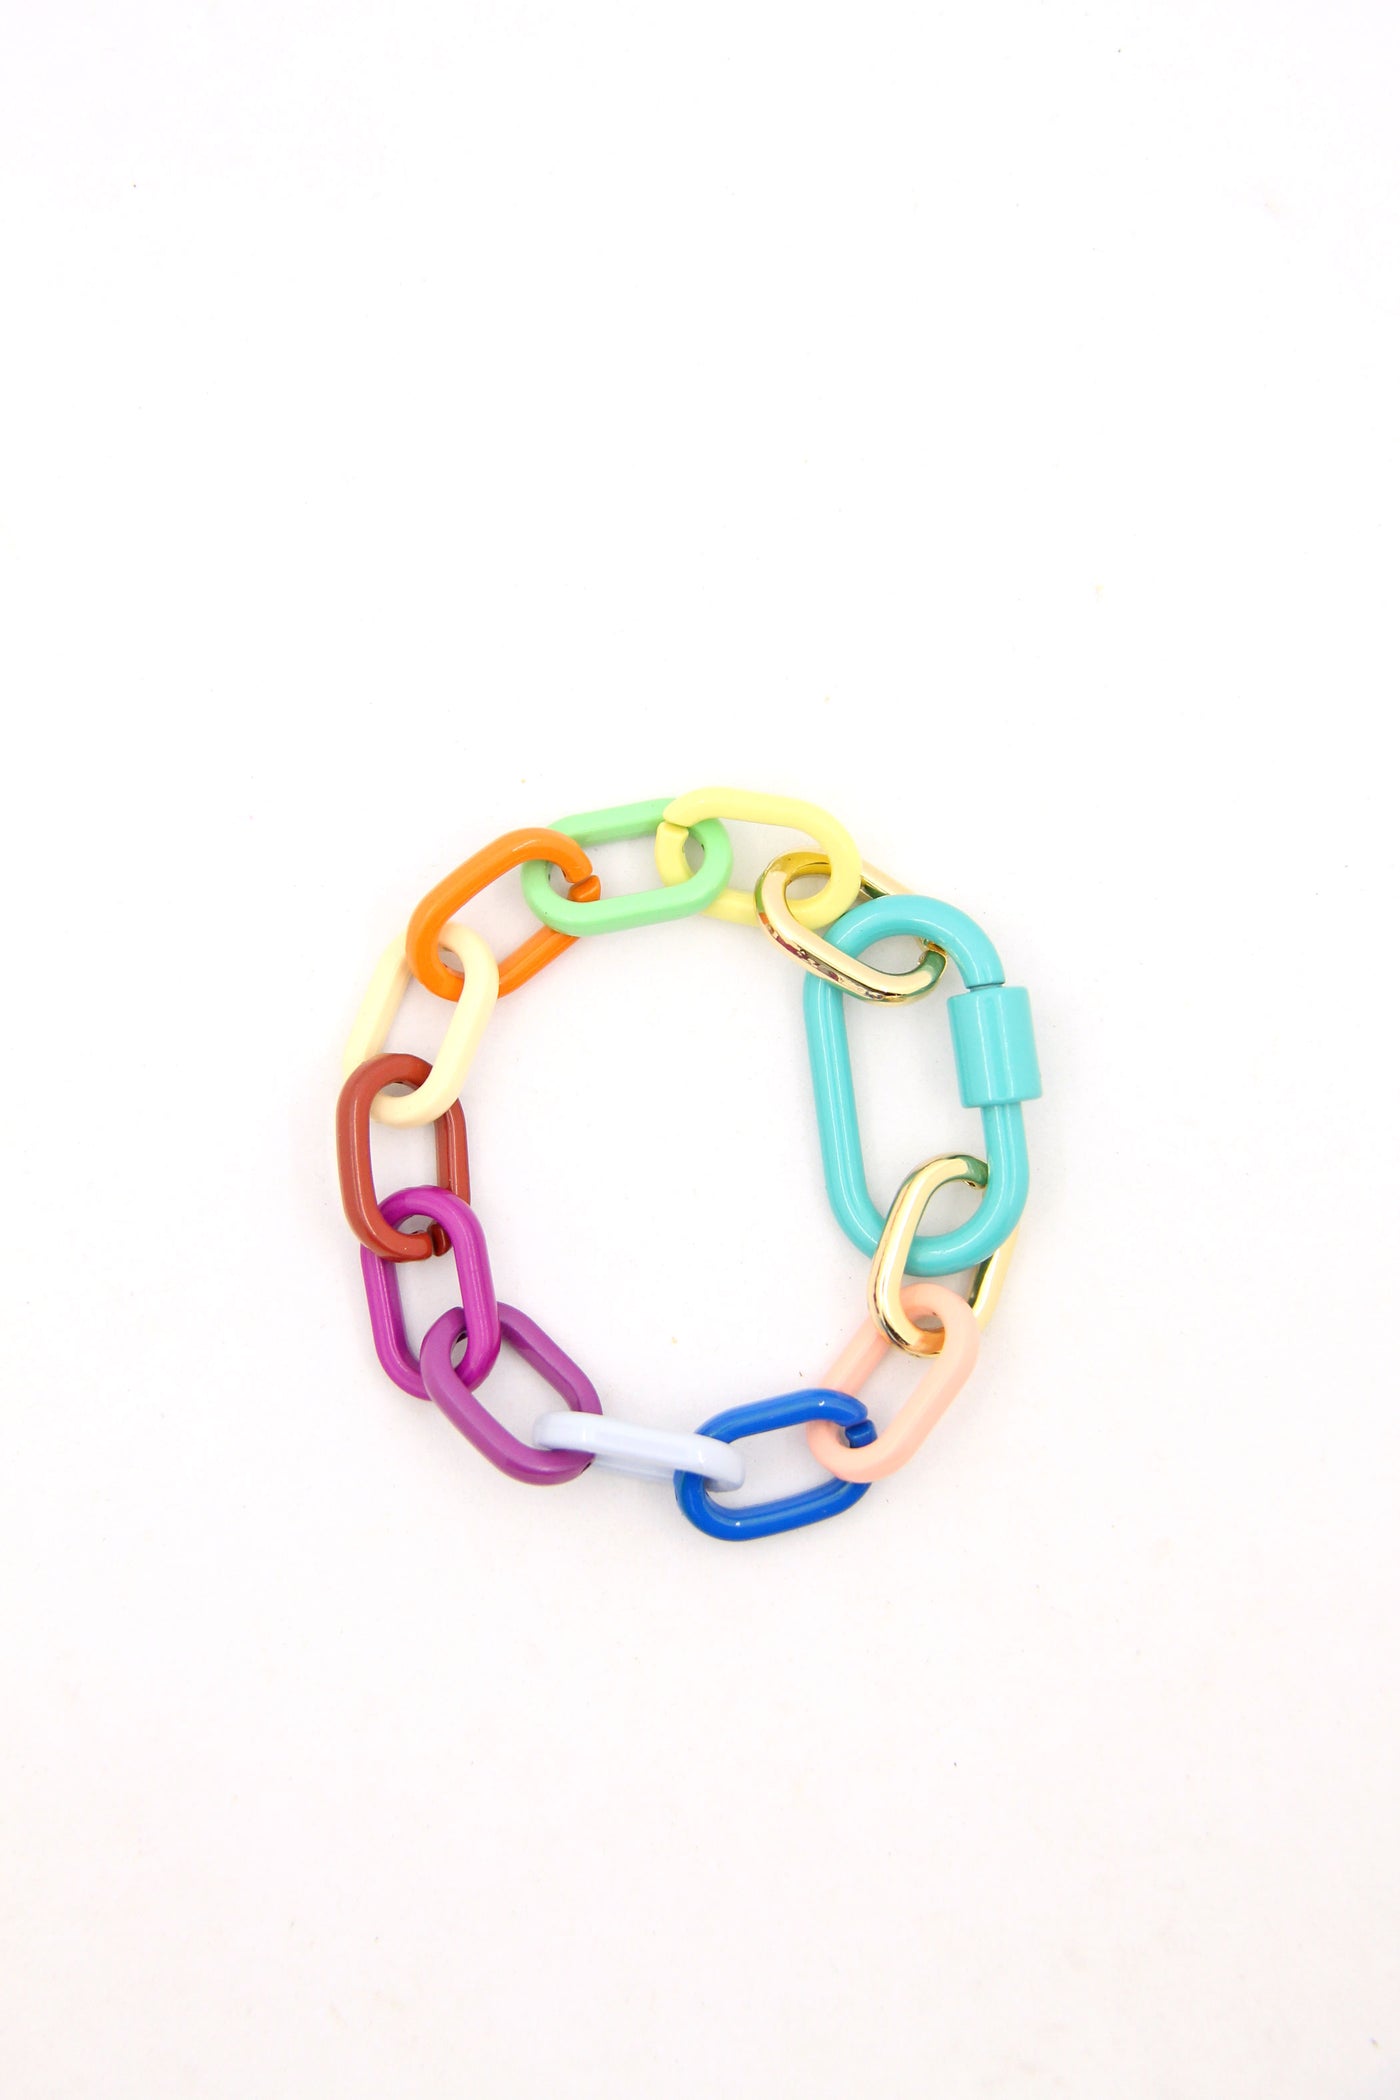 Clearance Colorful Sea Shell Enamel Charms (2pcs / 14mm x 17mm / Gradient Color) Beach Charm Bracelet Earrings Pendant Necklace Marine Life CHM1685